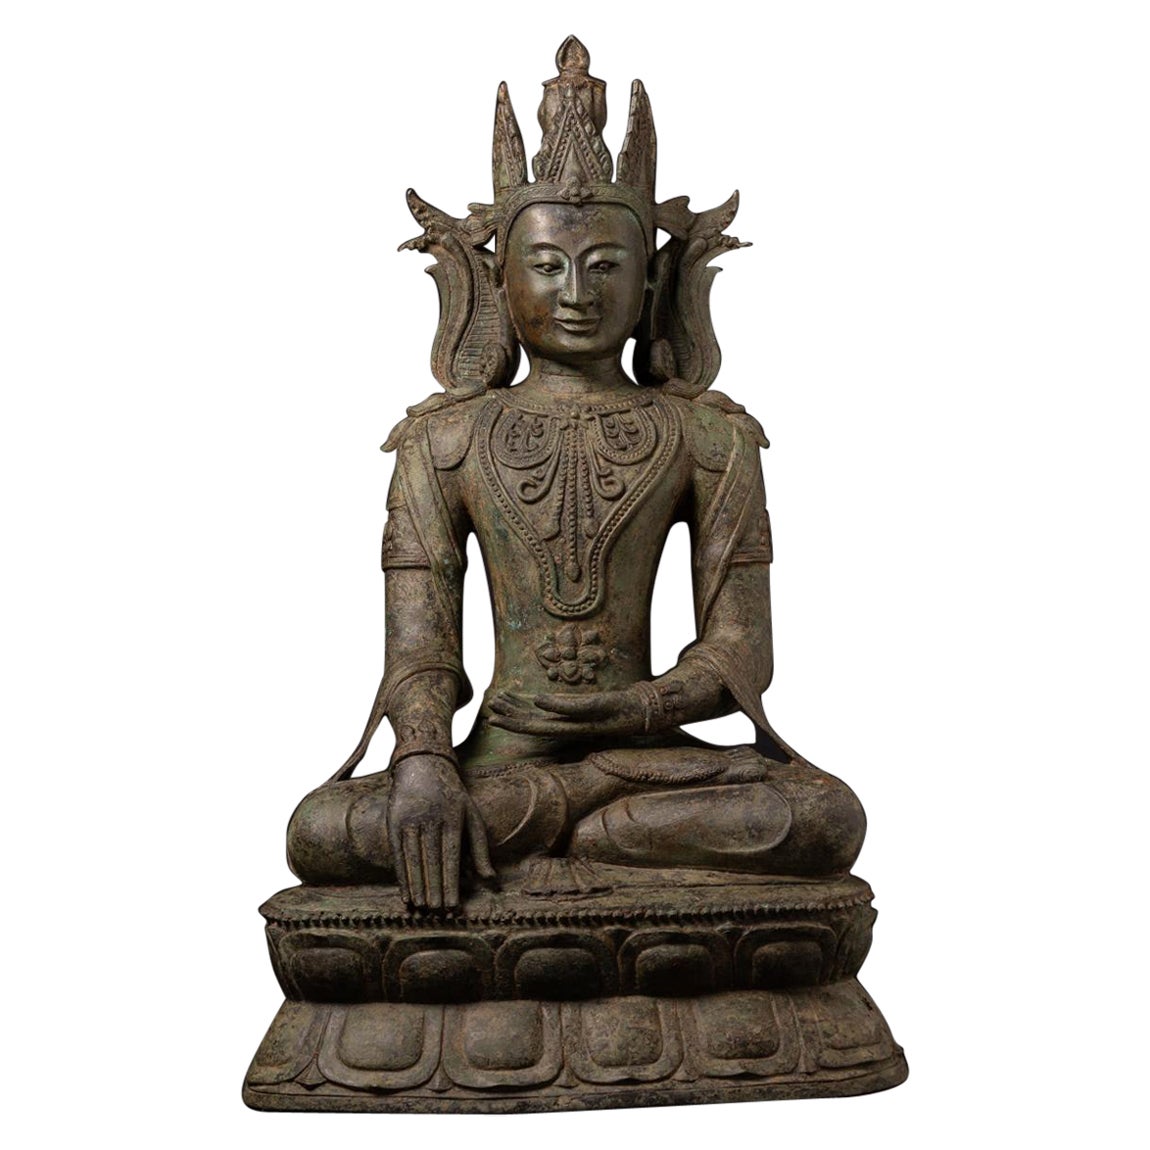 Sondere antike Arakan-Buddha-Statue aus Bronze aus Burma aus dem 19. Jahrhundert